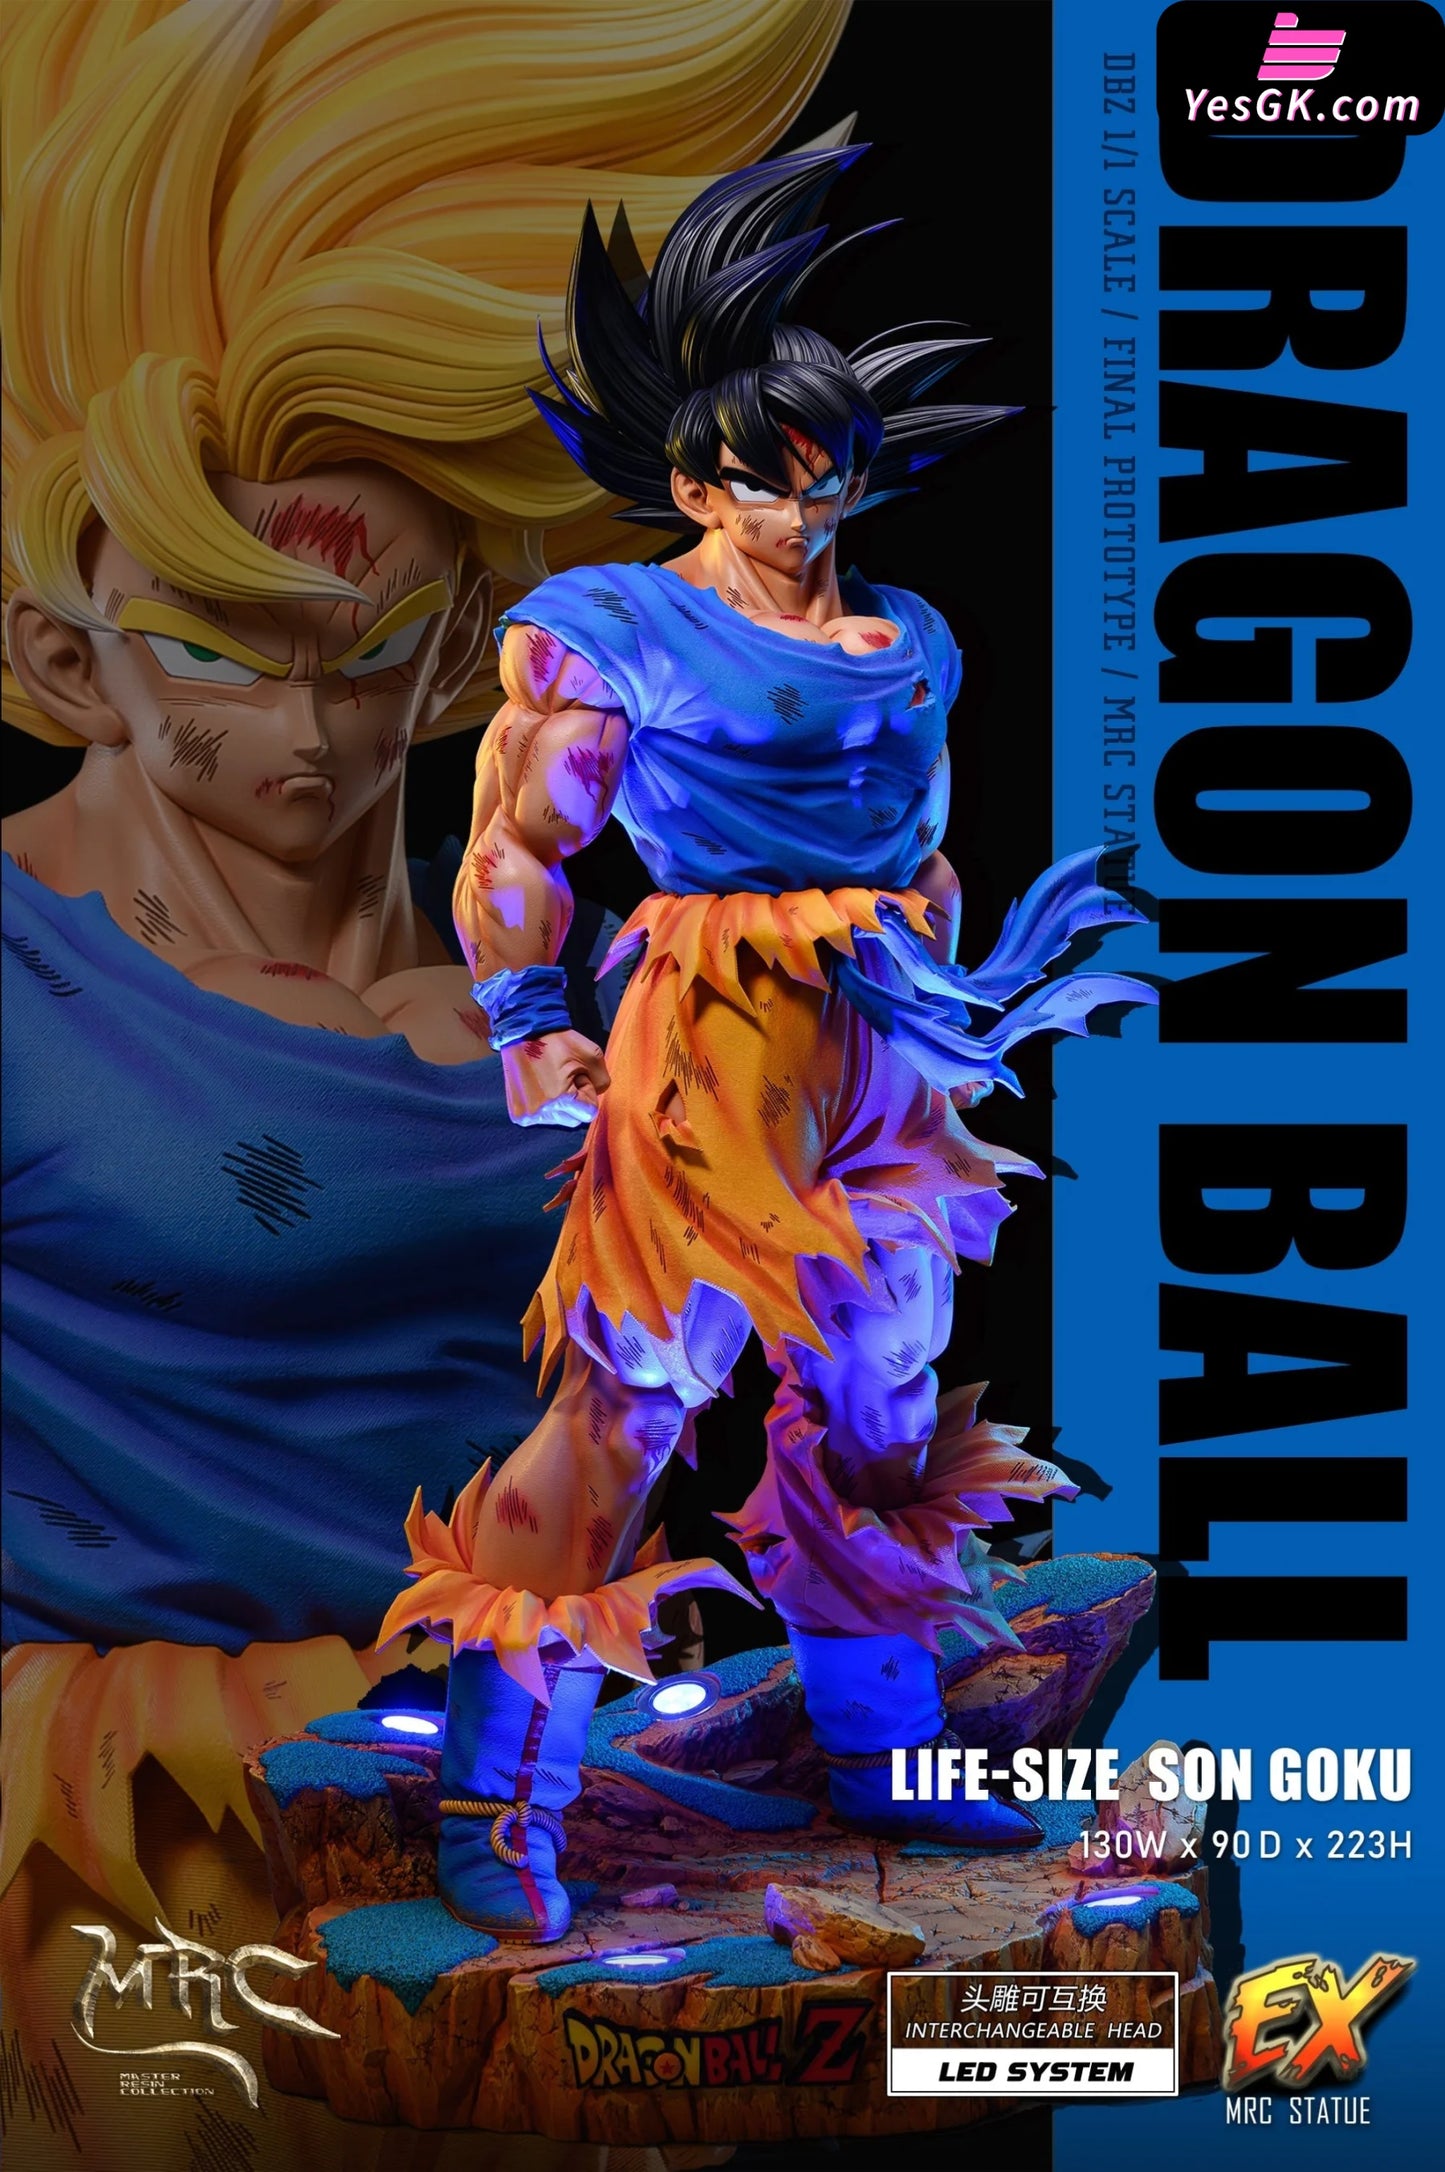 Dragon Ball 1/1 Life Size Son Goku Statue - Mrc Studio [Pre-Order] Deposit / Whole Body B Version